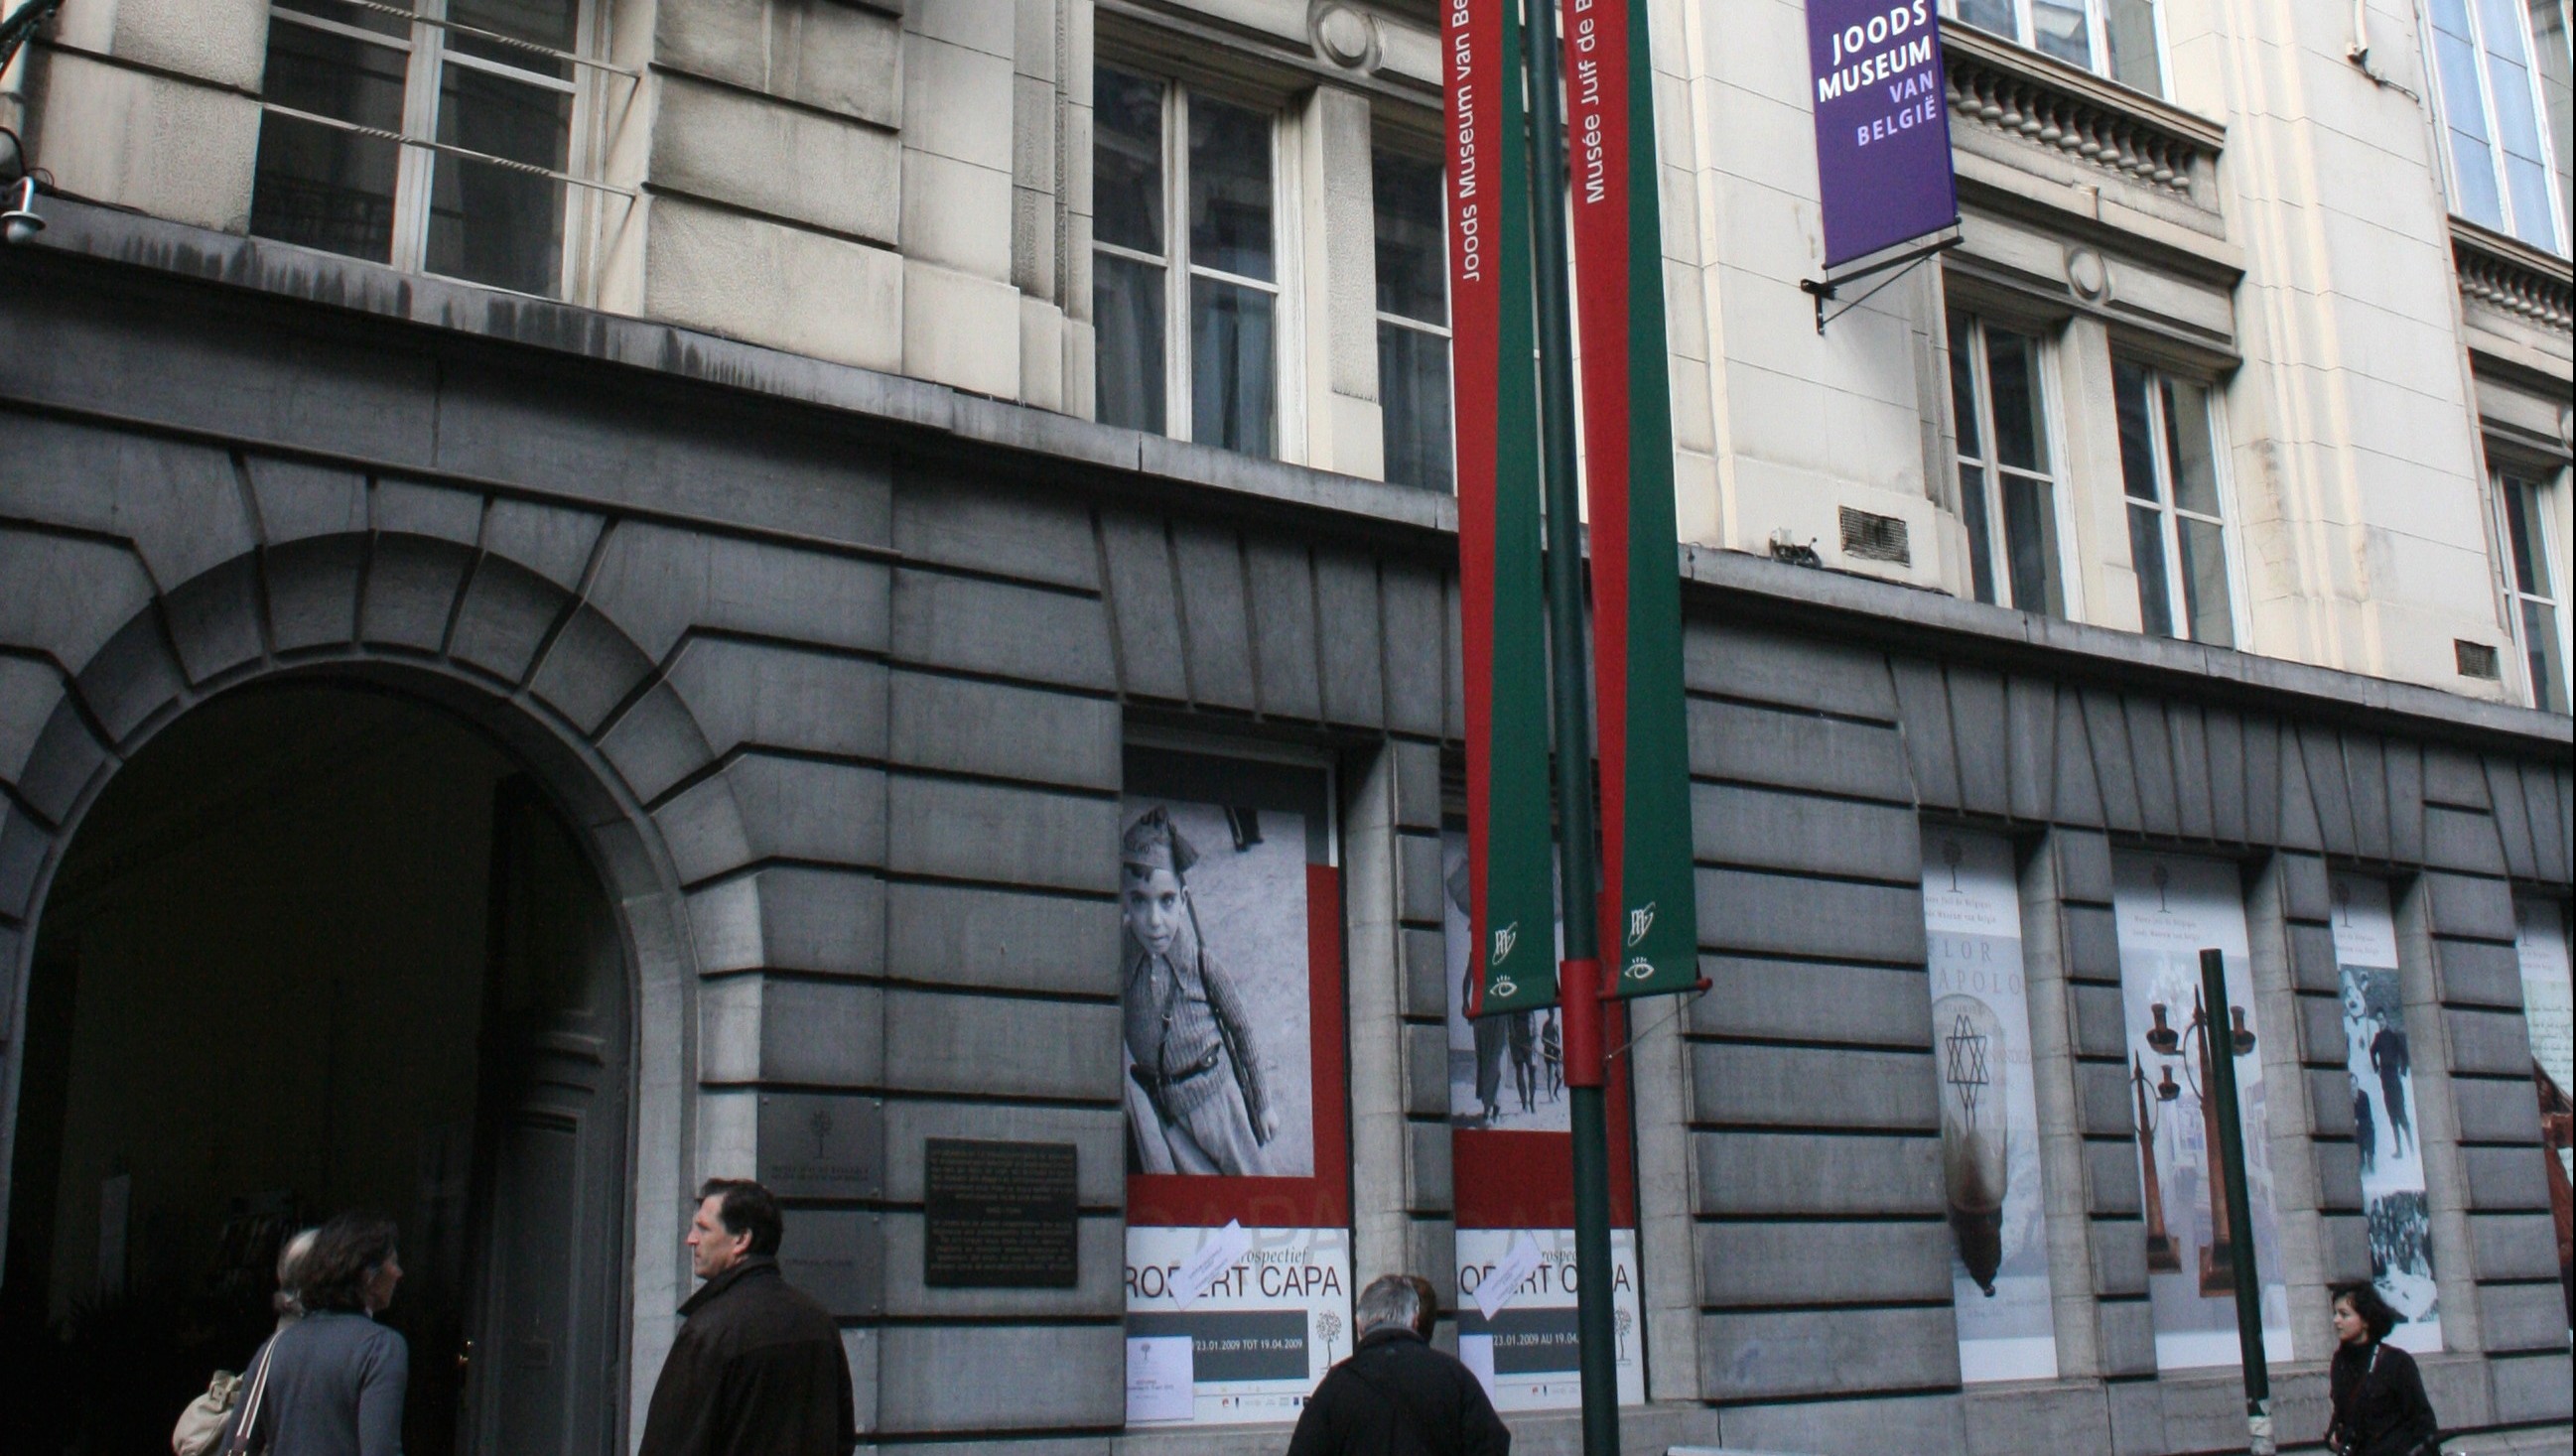 Joods Museum Brussel